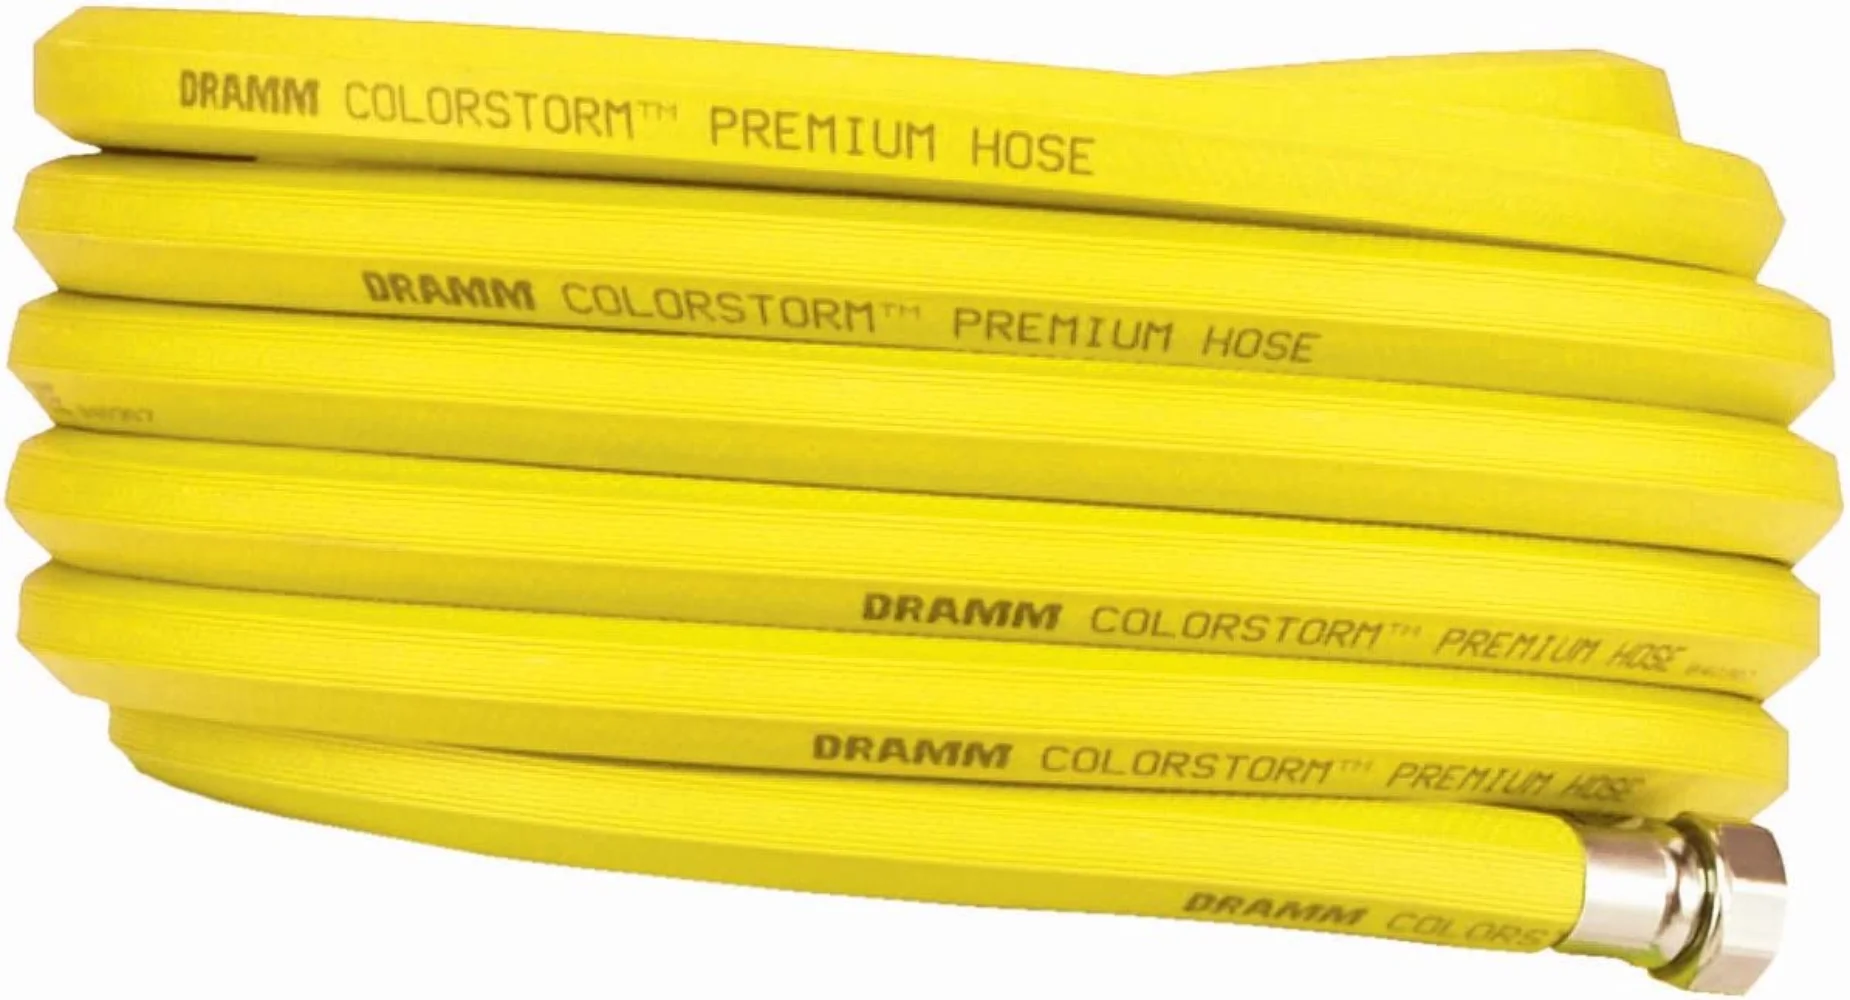 Dramm 17313 ColorStorm Premium Rubber Hose, Garden Hoses,3/4" x 100', Yellow